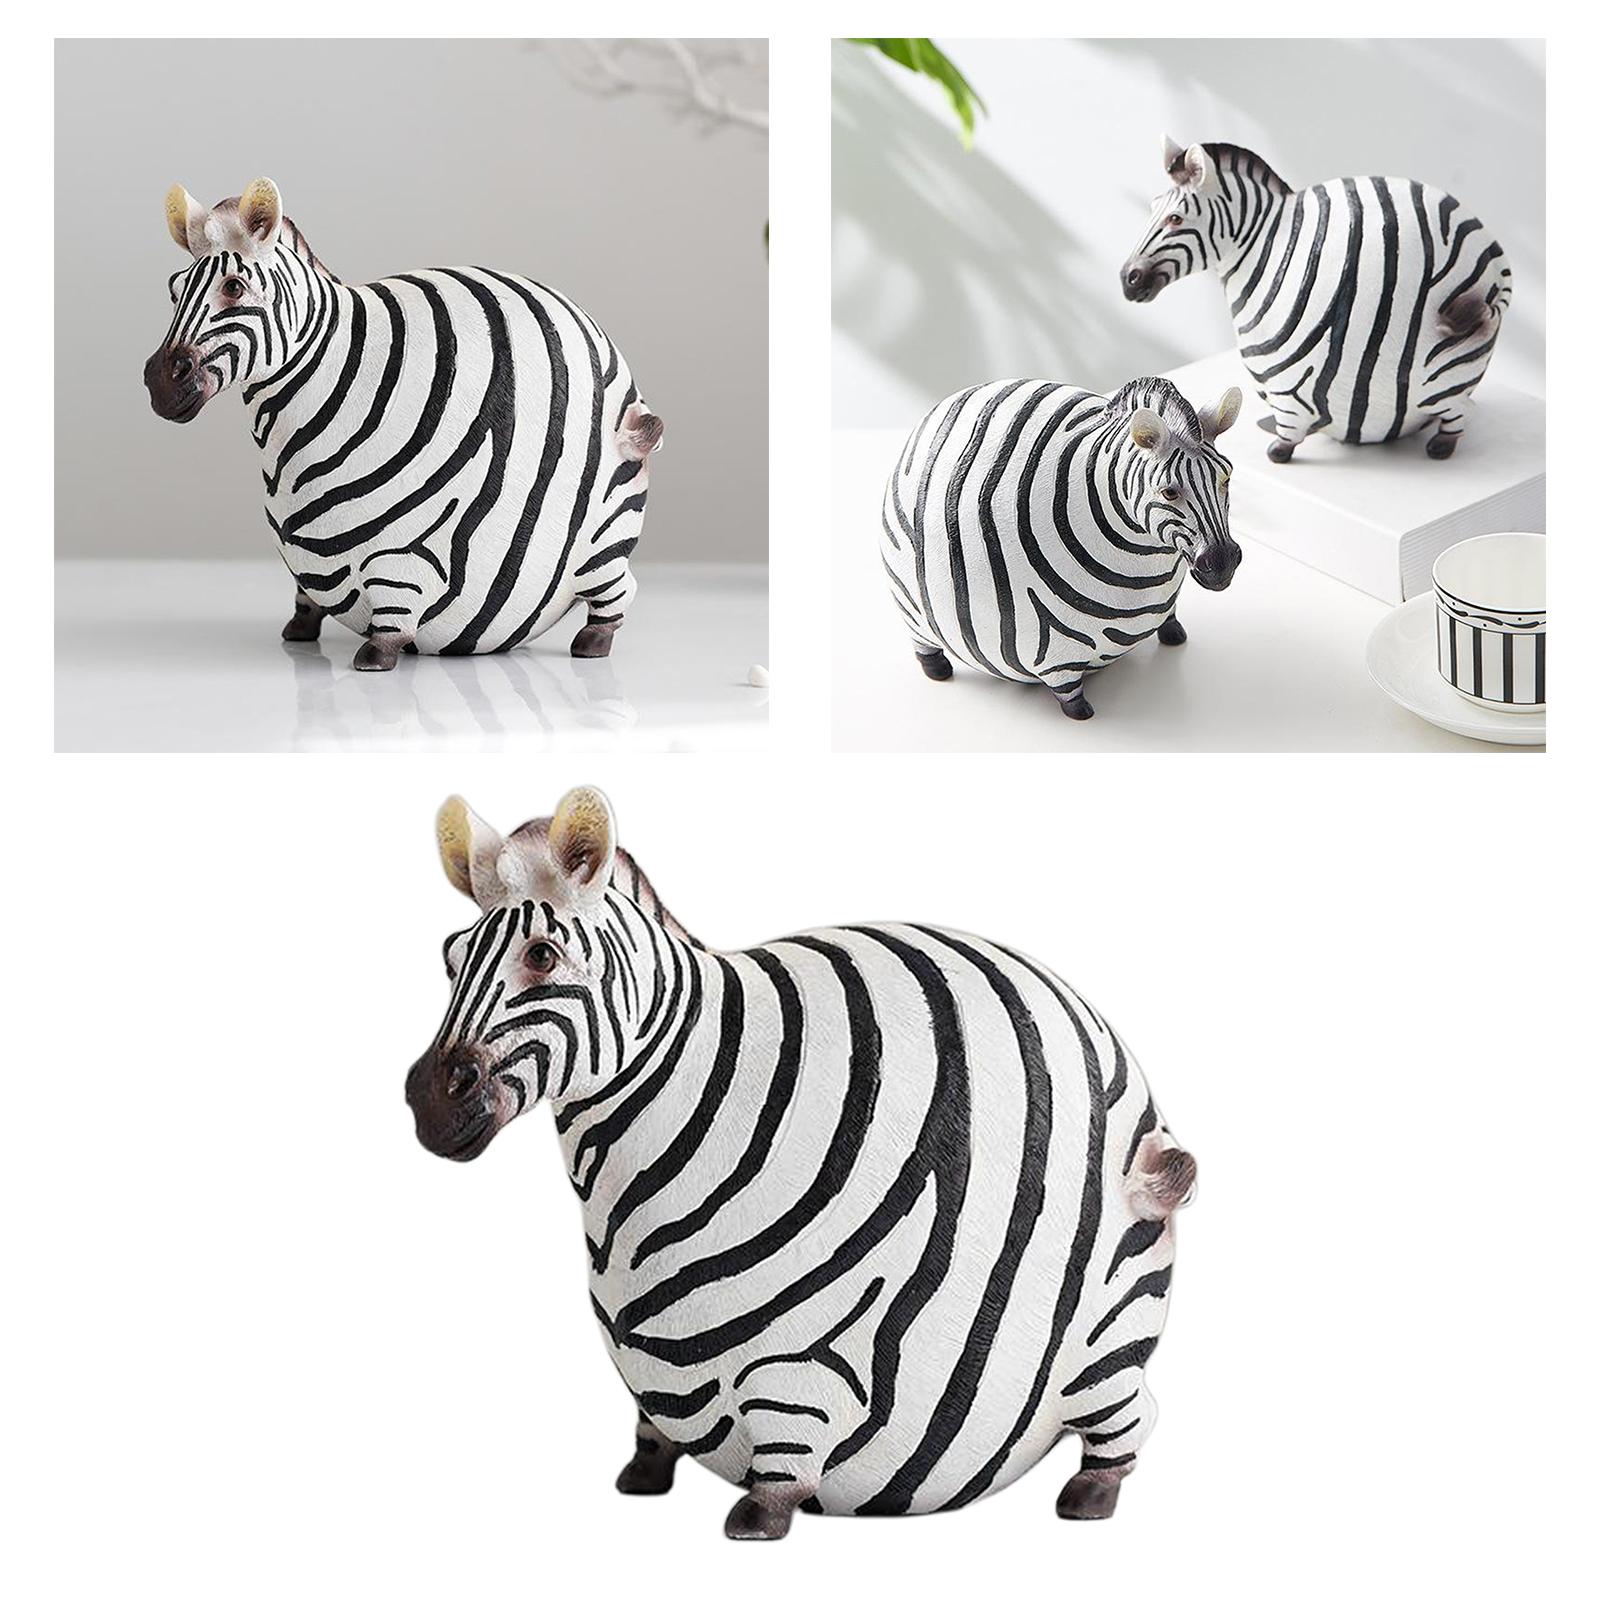 Cute Zebra Figurine Kids Toy Art Collectible Office Decoration Right Zebra